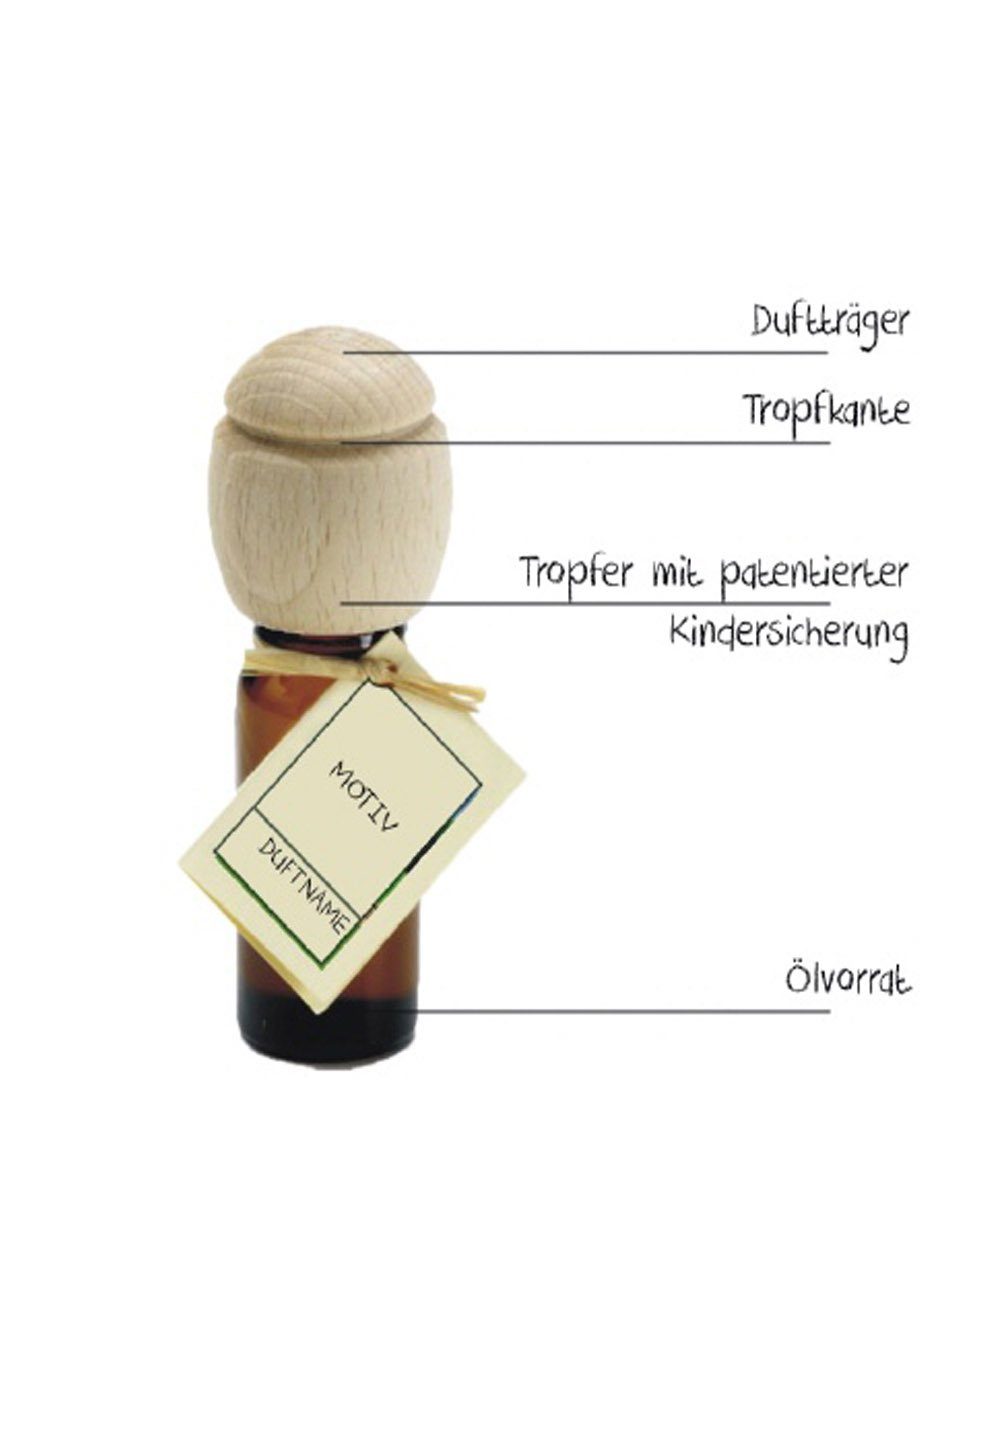 Parfümöl Raumduft Mallorquin Piccolino Raumduft für Traumduft-Manufaktur Aromatherapie Duftöl Diffusor (1-St), 10 ml